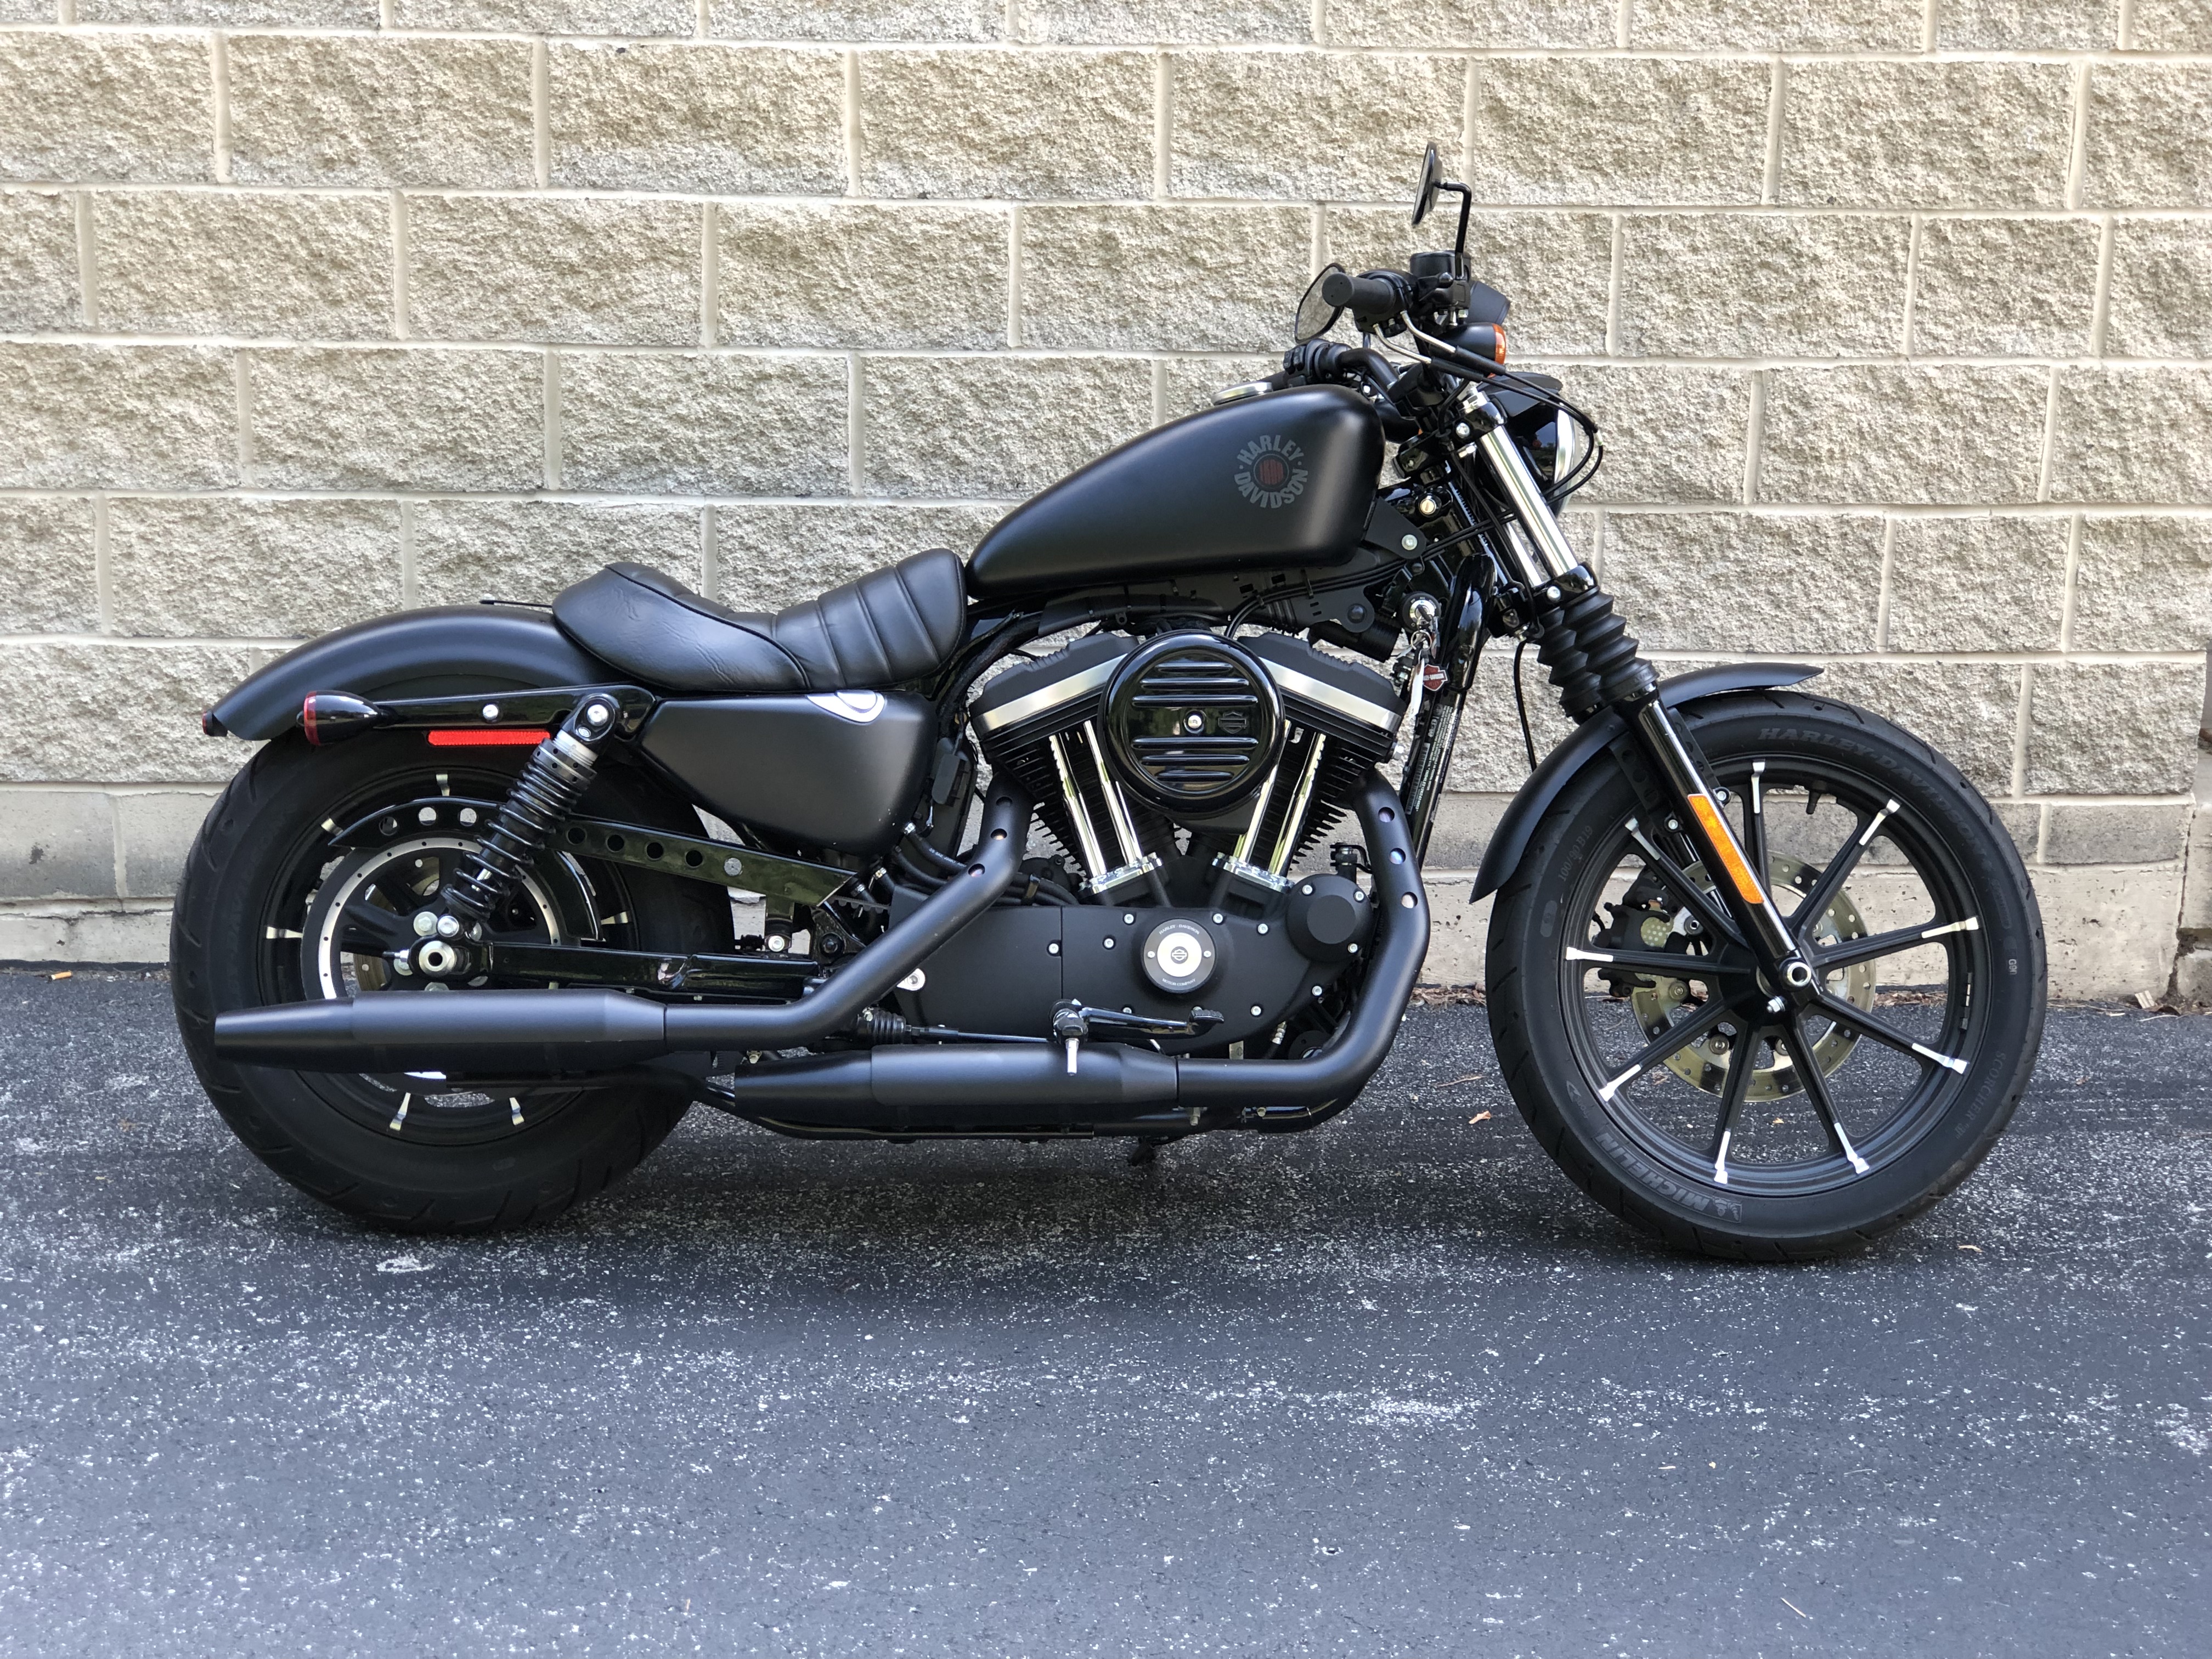 48 Top Terbaru Harley Davidson 2019 Iron 883 Review